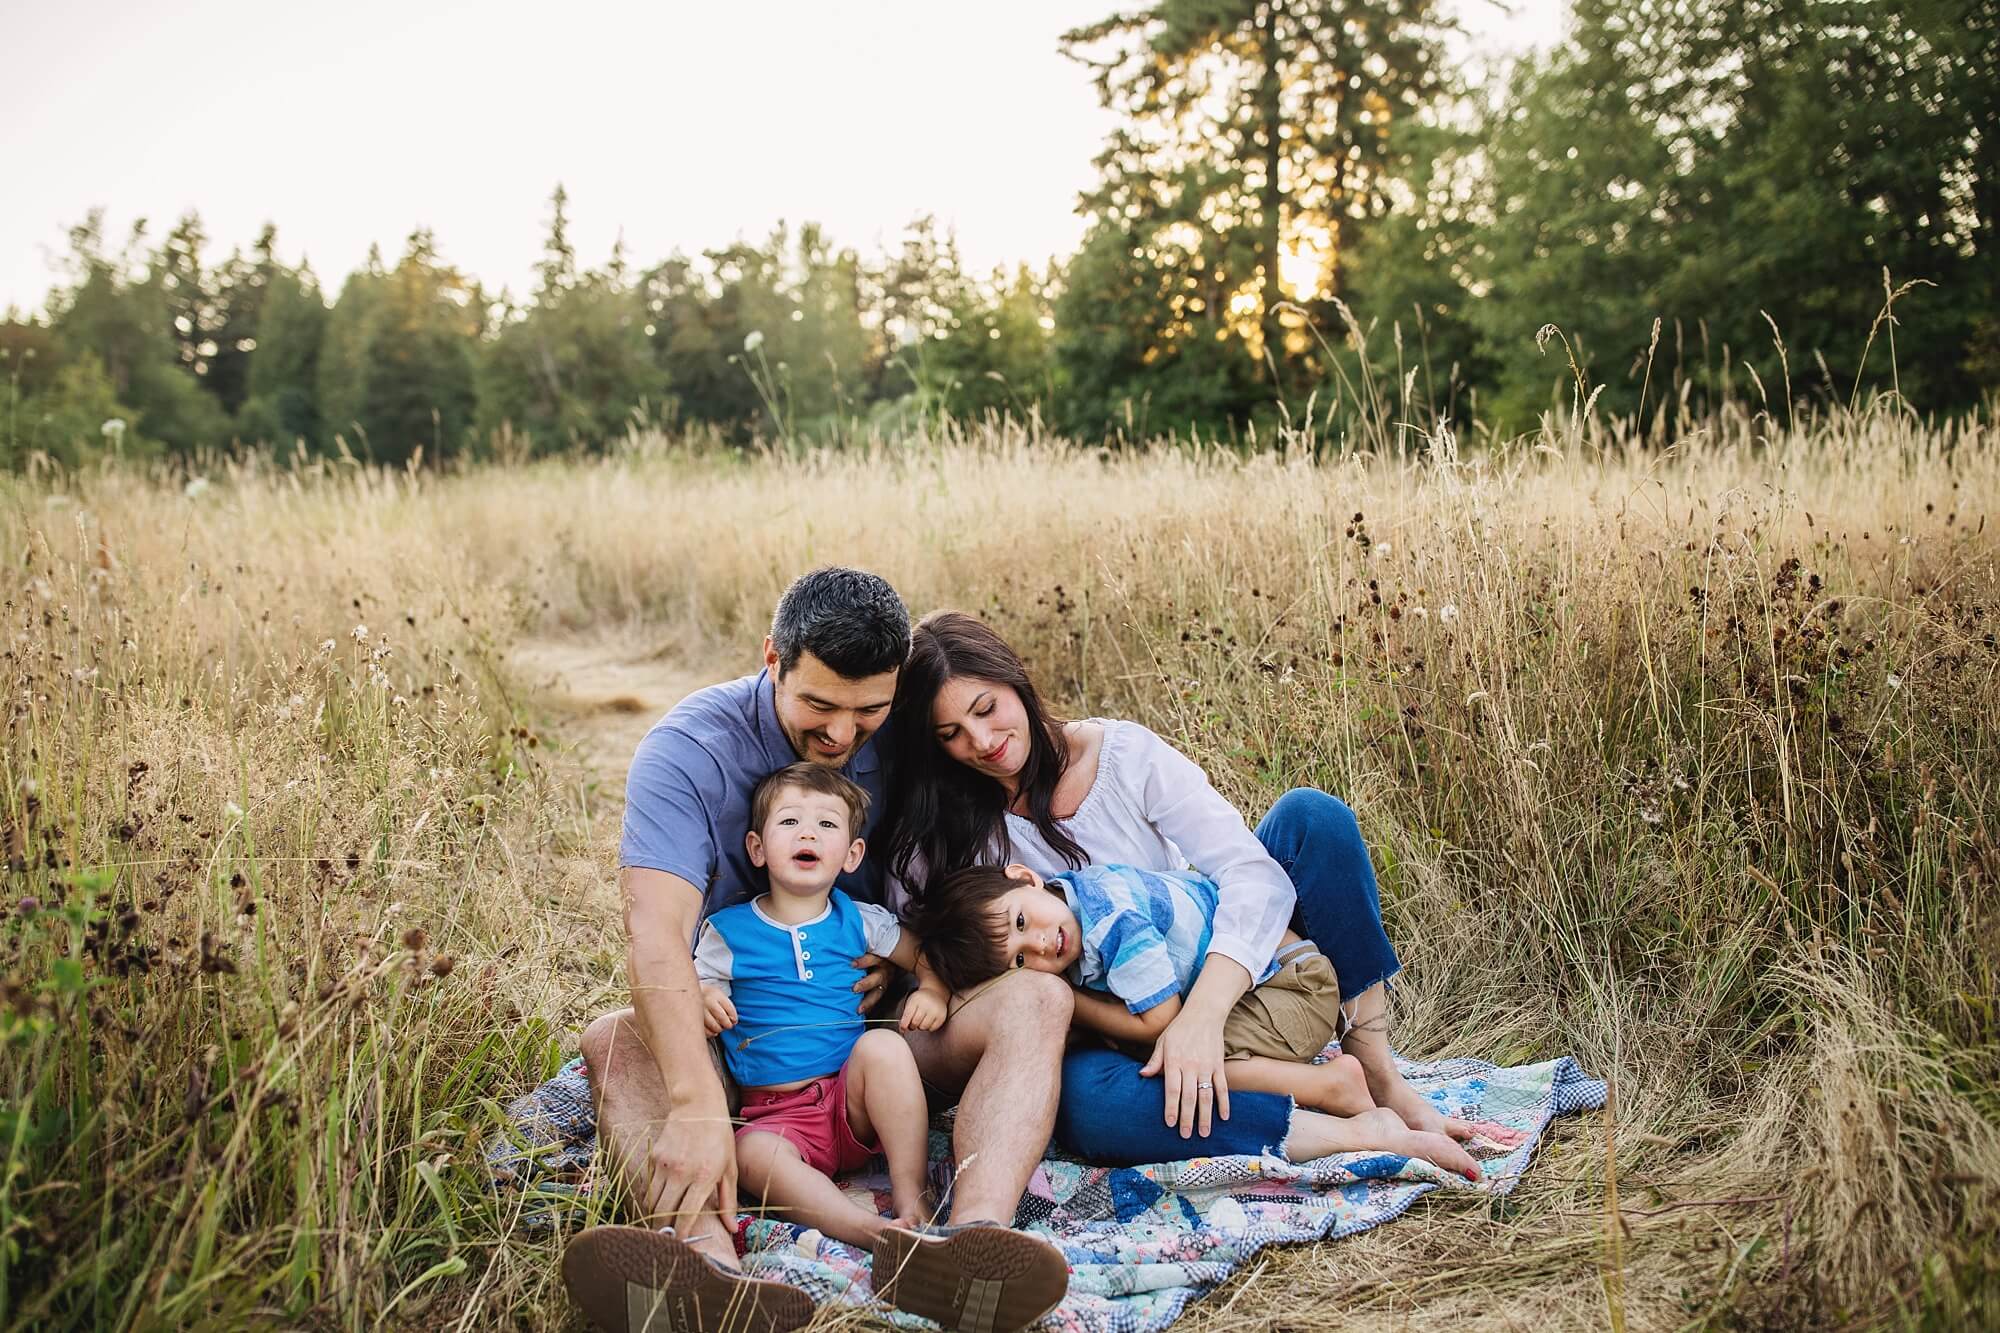 Puyallup sunset family session | tacoma family photographer